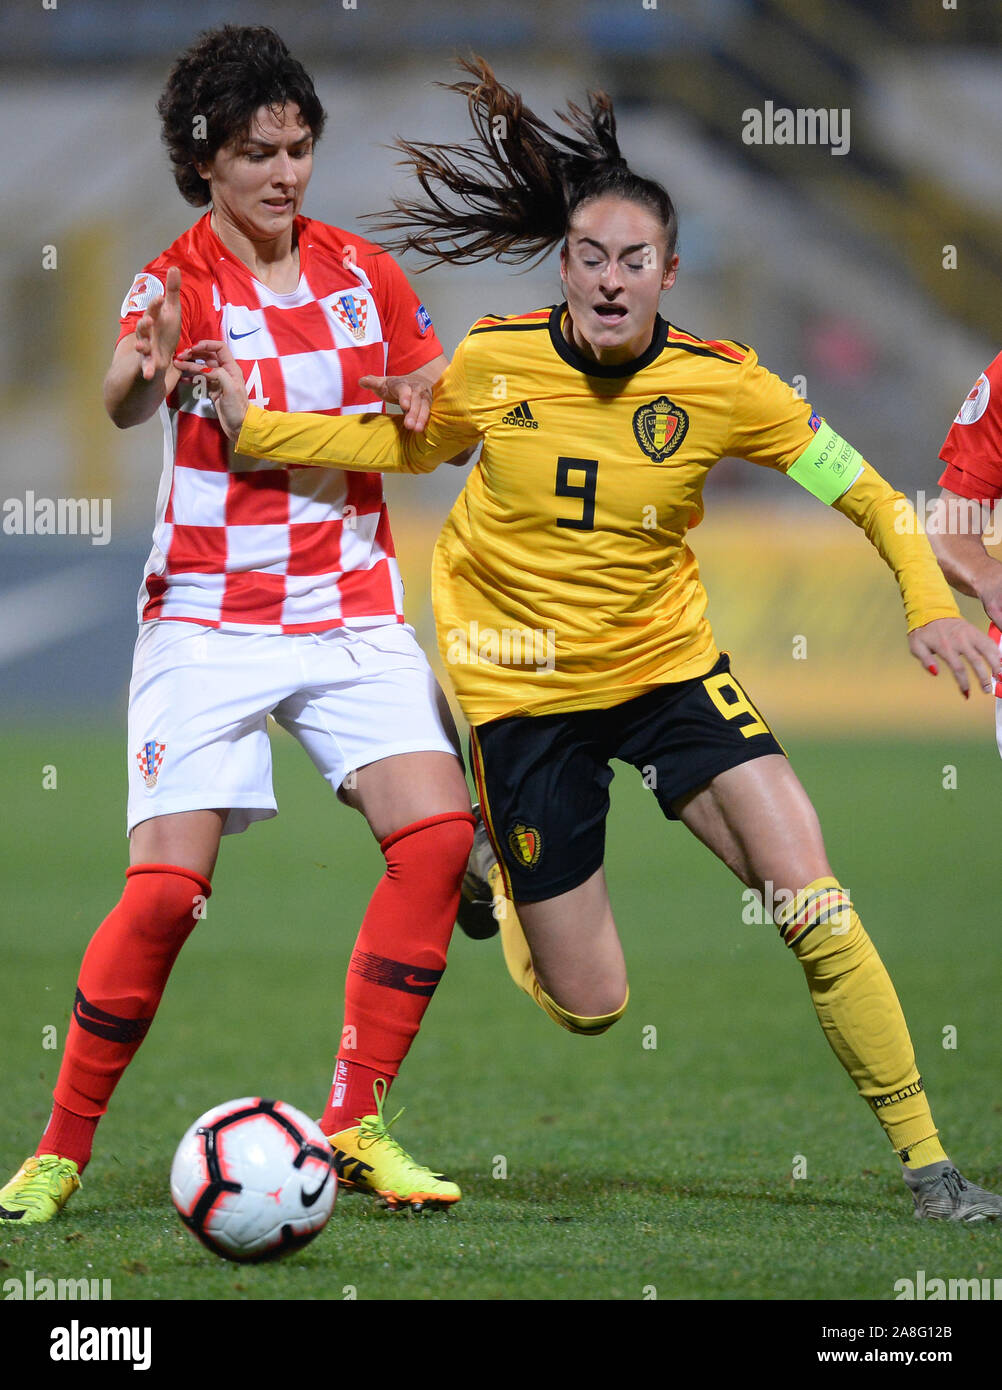 (191109) -- ZAPRESIC, Nov. 9, 2019 (Xinhua) -- Leonarda Balog (L) of Croatia vies with Tessa Wullaert of Belgium during UEFA Women's Euro 2021 qualifiers in Zapresic, Croatia, Nov. 8, 2019. (Marko Prpic/Pixsell via Xinhua) Stock Photo